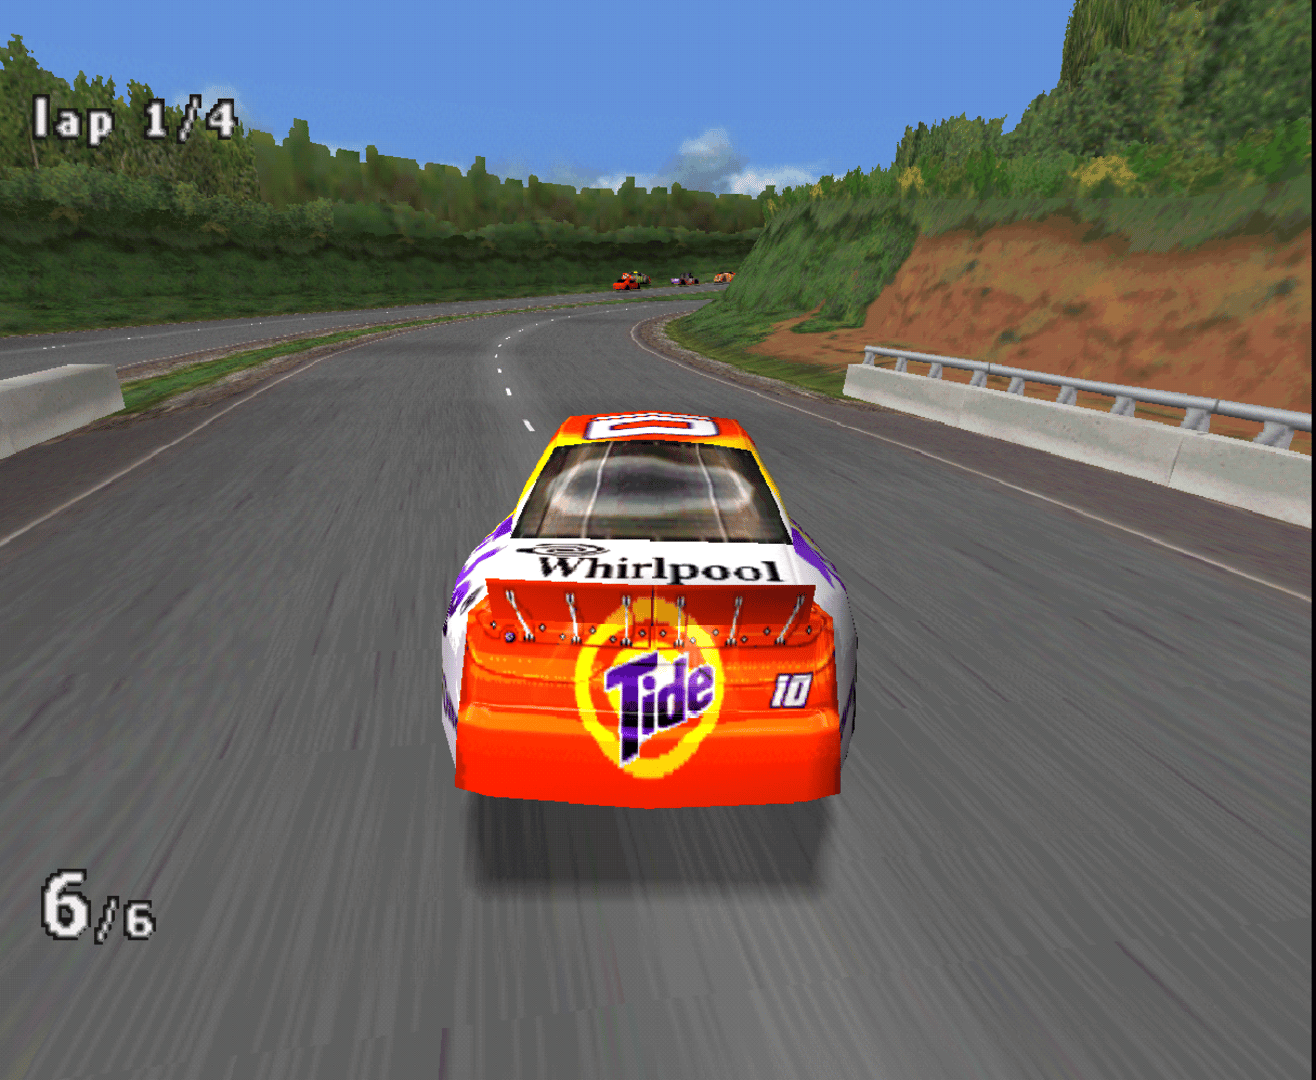 NASCAR Rumble screenshot